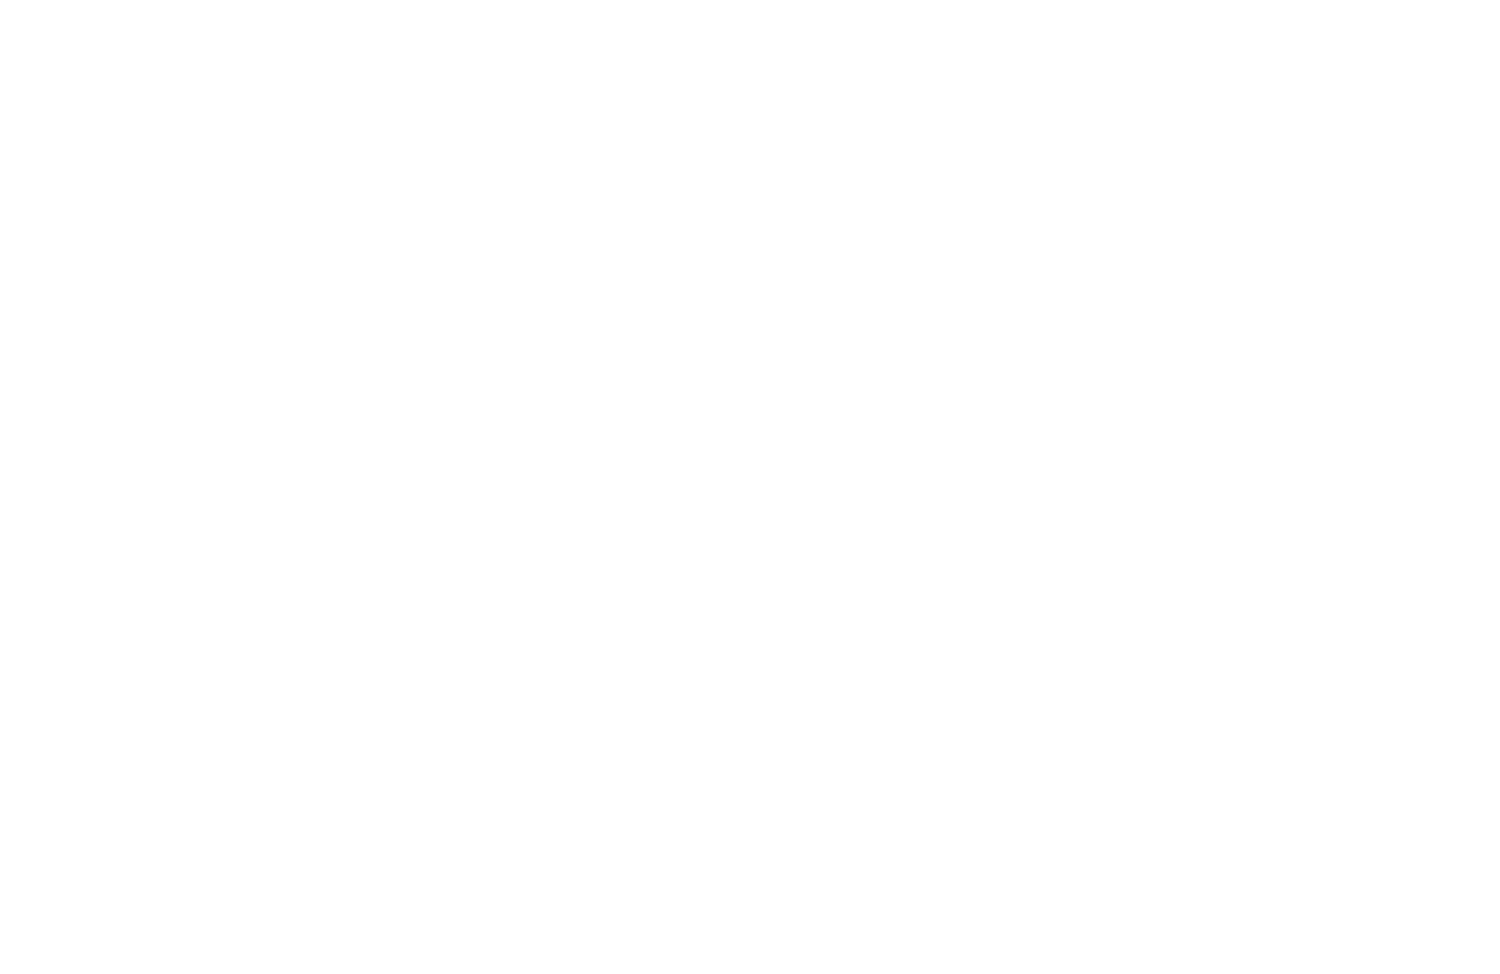 BYRDHOUSE MINISTRIES